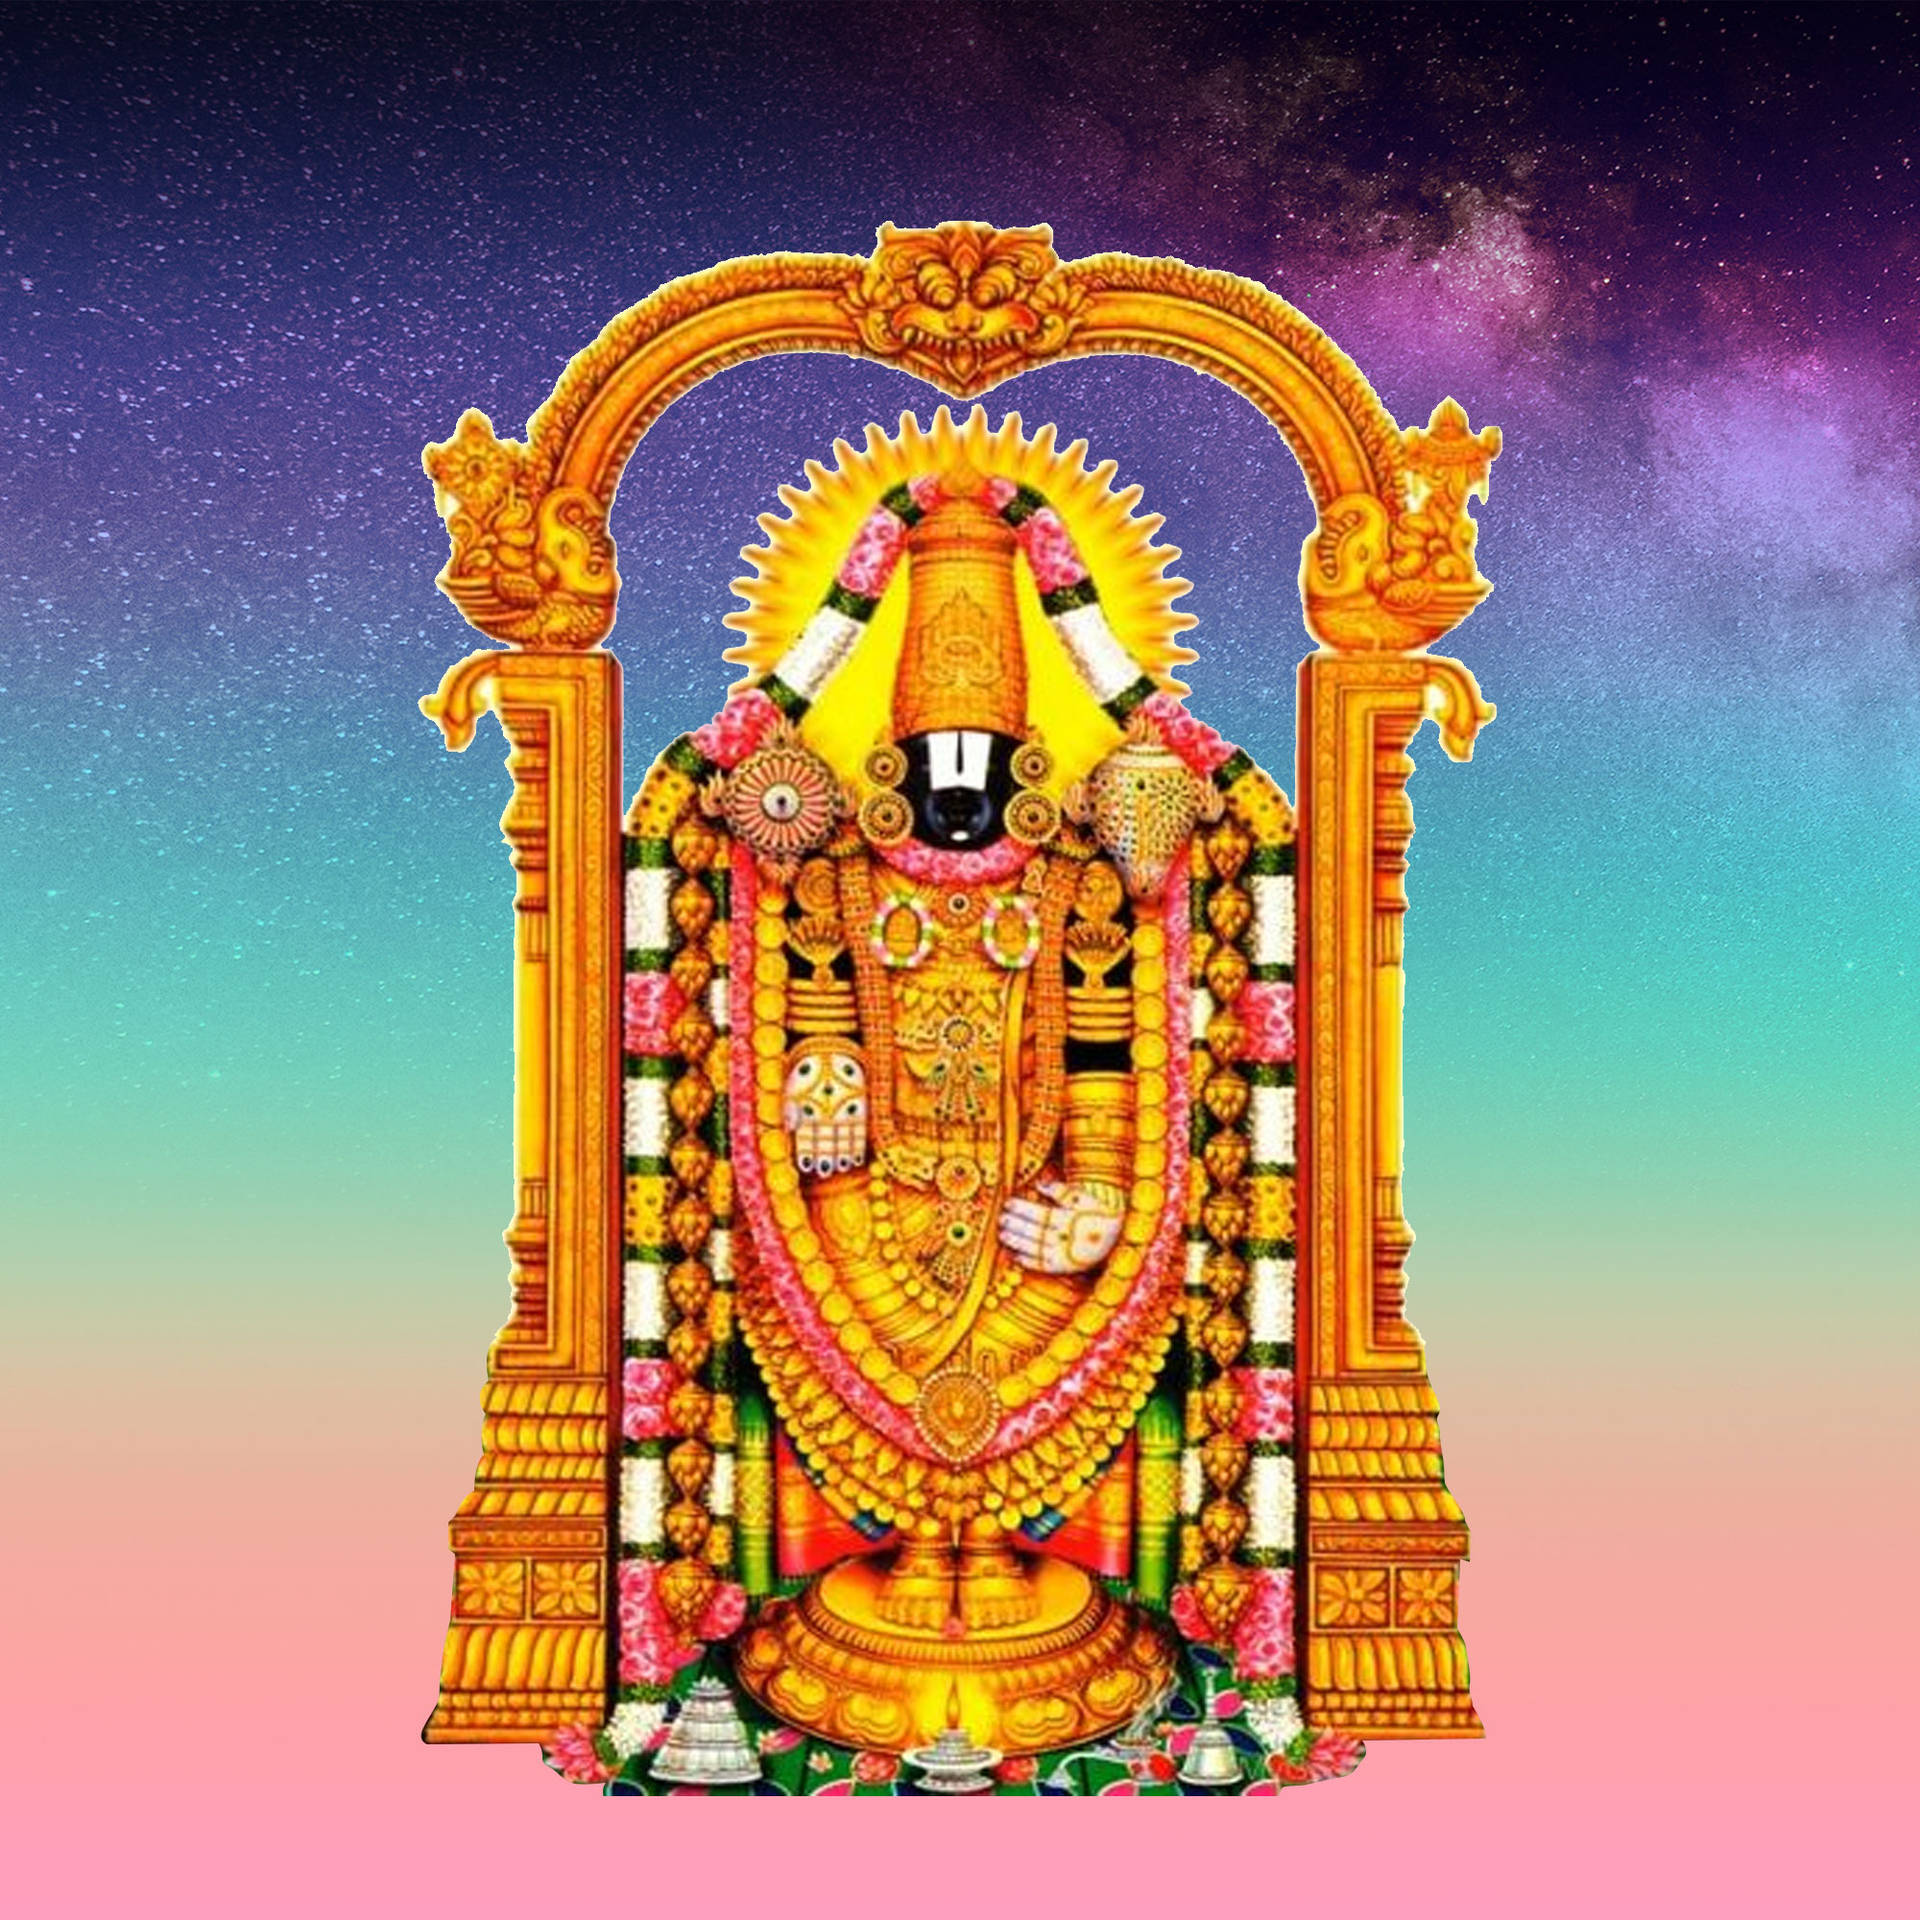 Download Venkateswara Swamy Deity Of Hindu Religion Wallpaper | Wallpapers .com